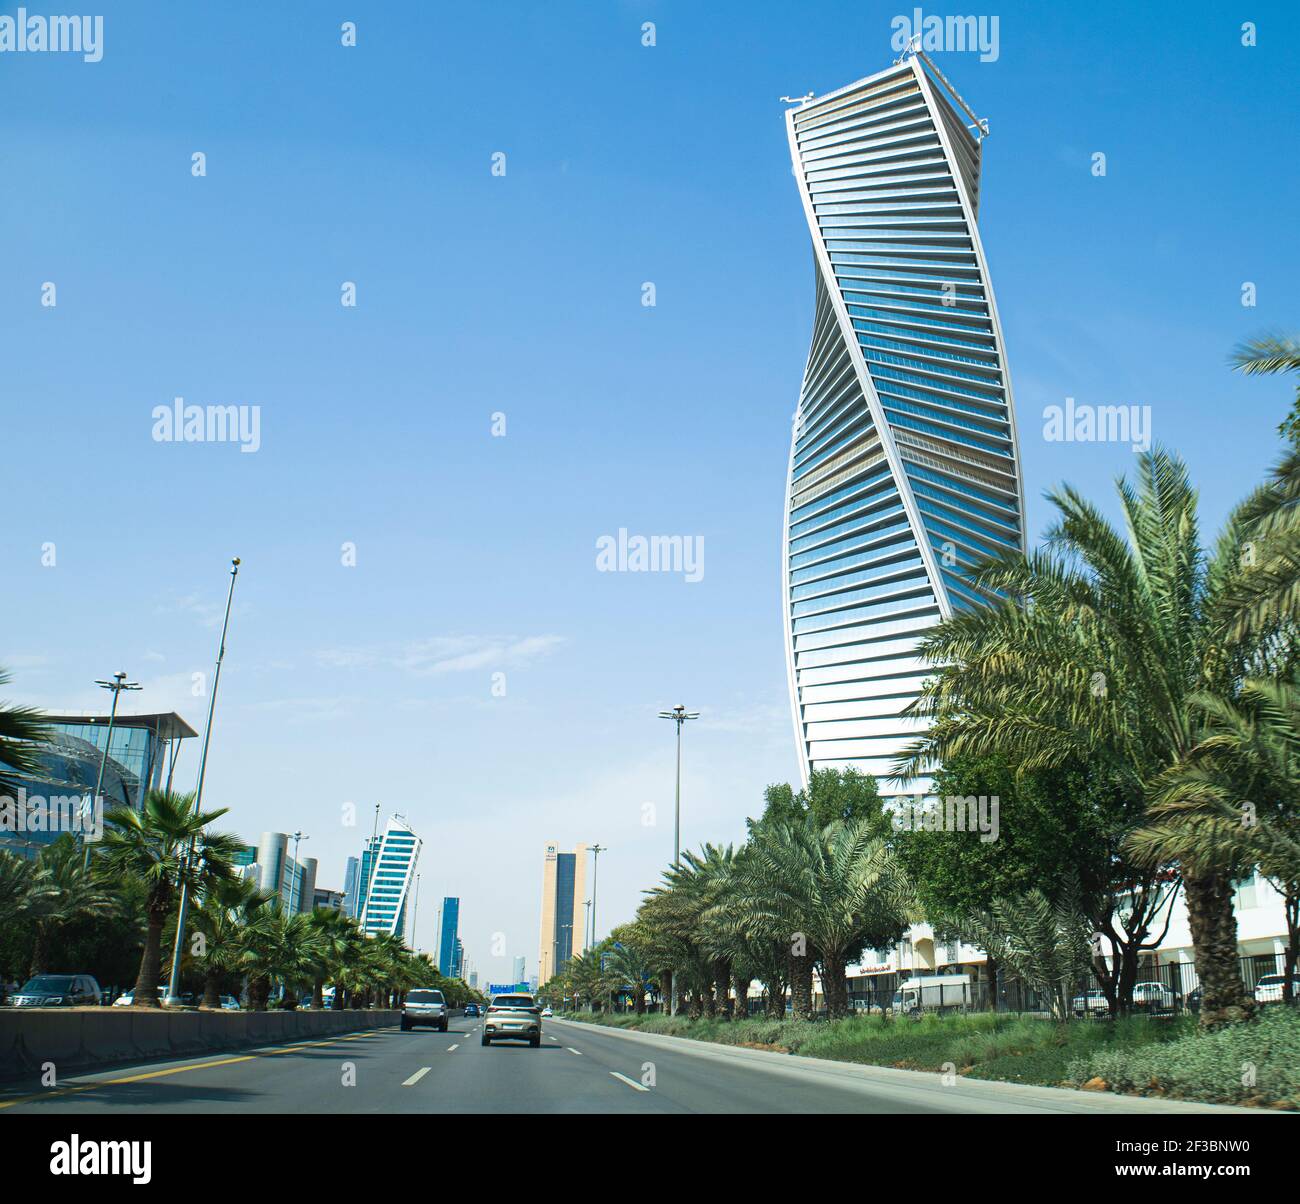 Riyadh City - Saudi Arabia - tower - Street - Modern Architecture Design - Twist building Stock Photo